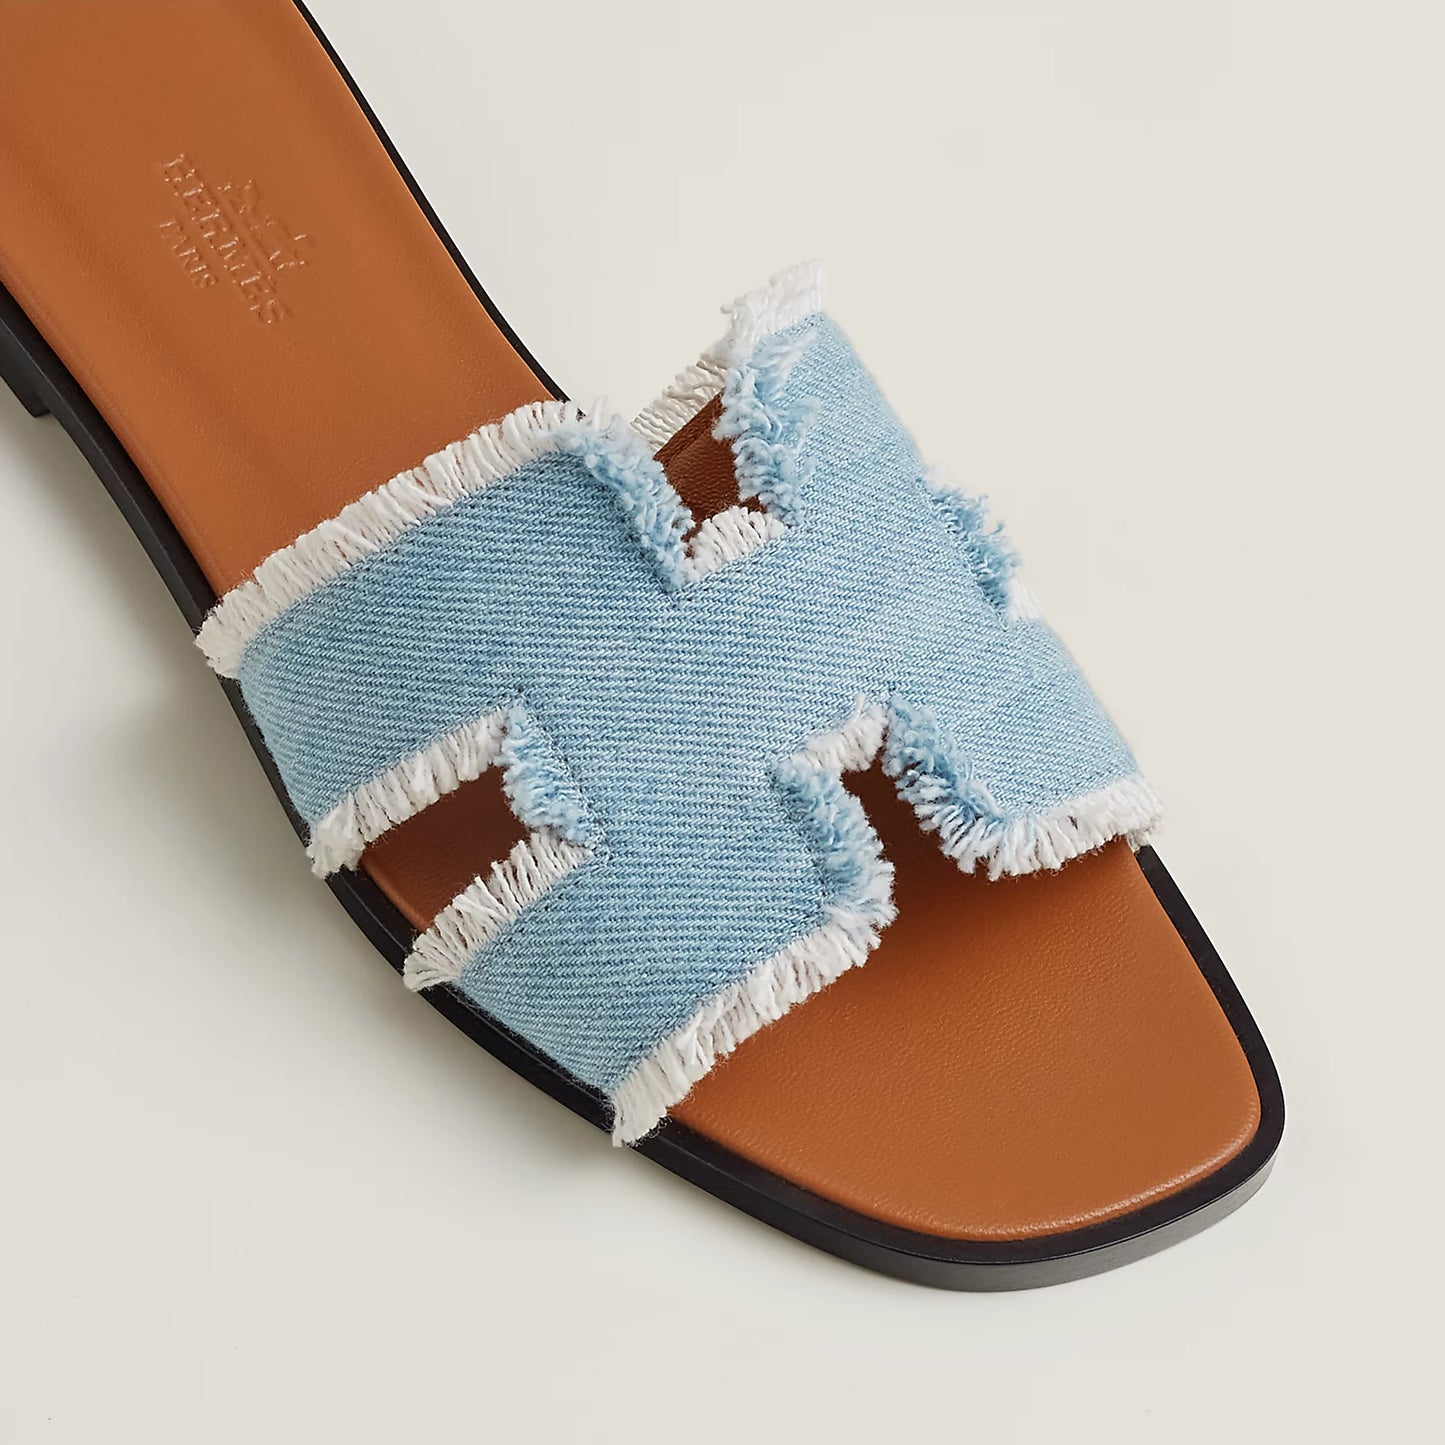 Hermes Oran Denim Sandal “Bleu Clair”